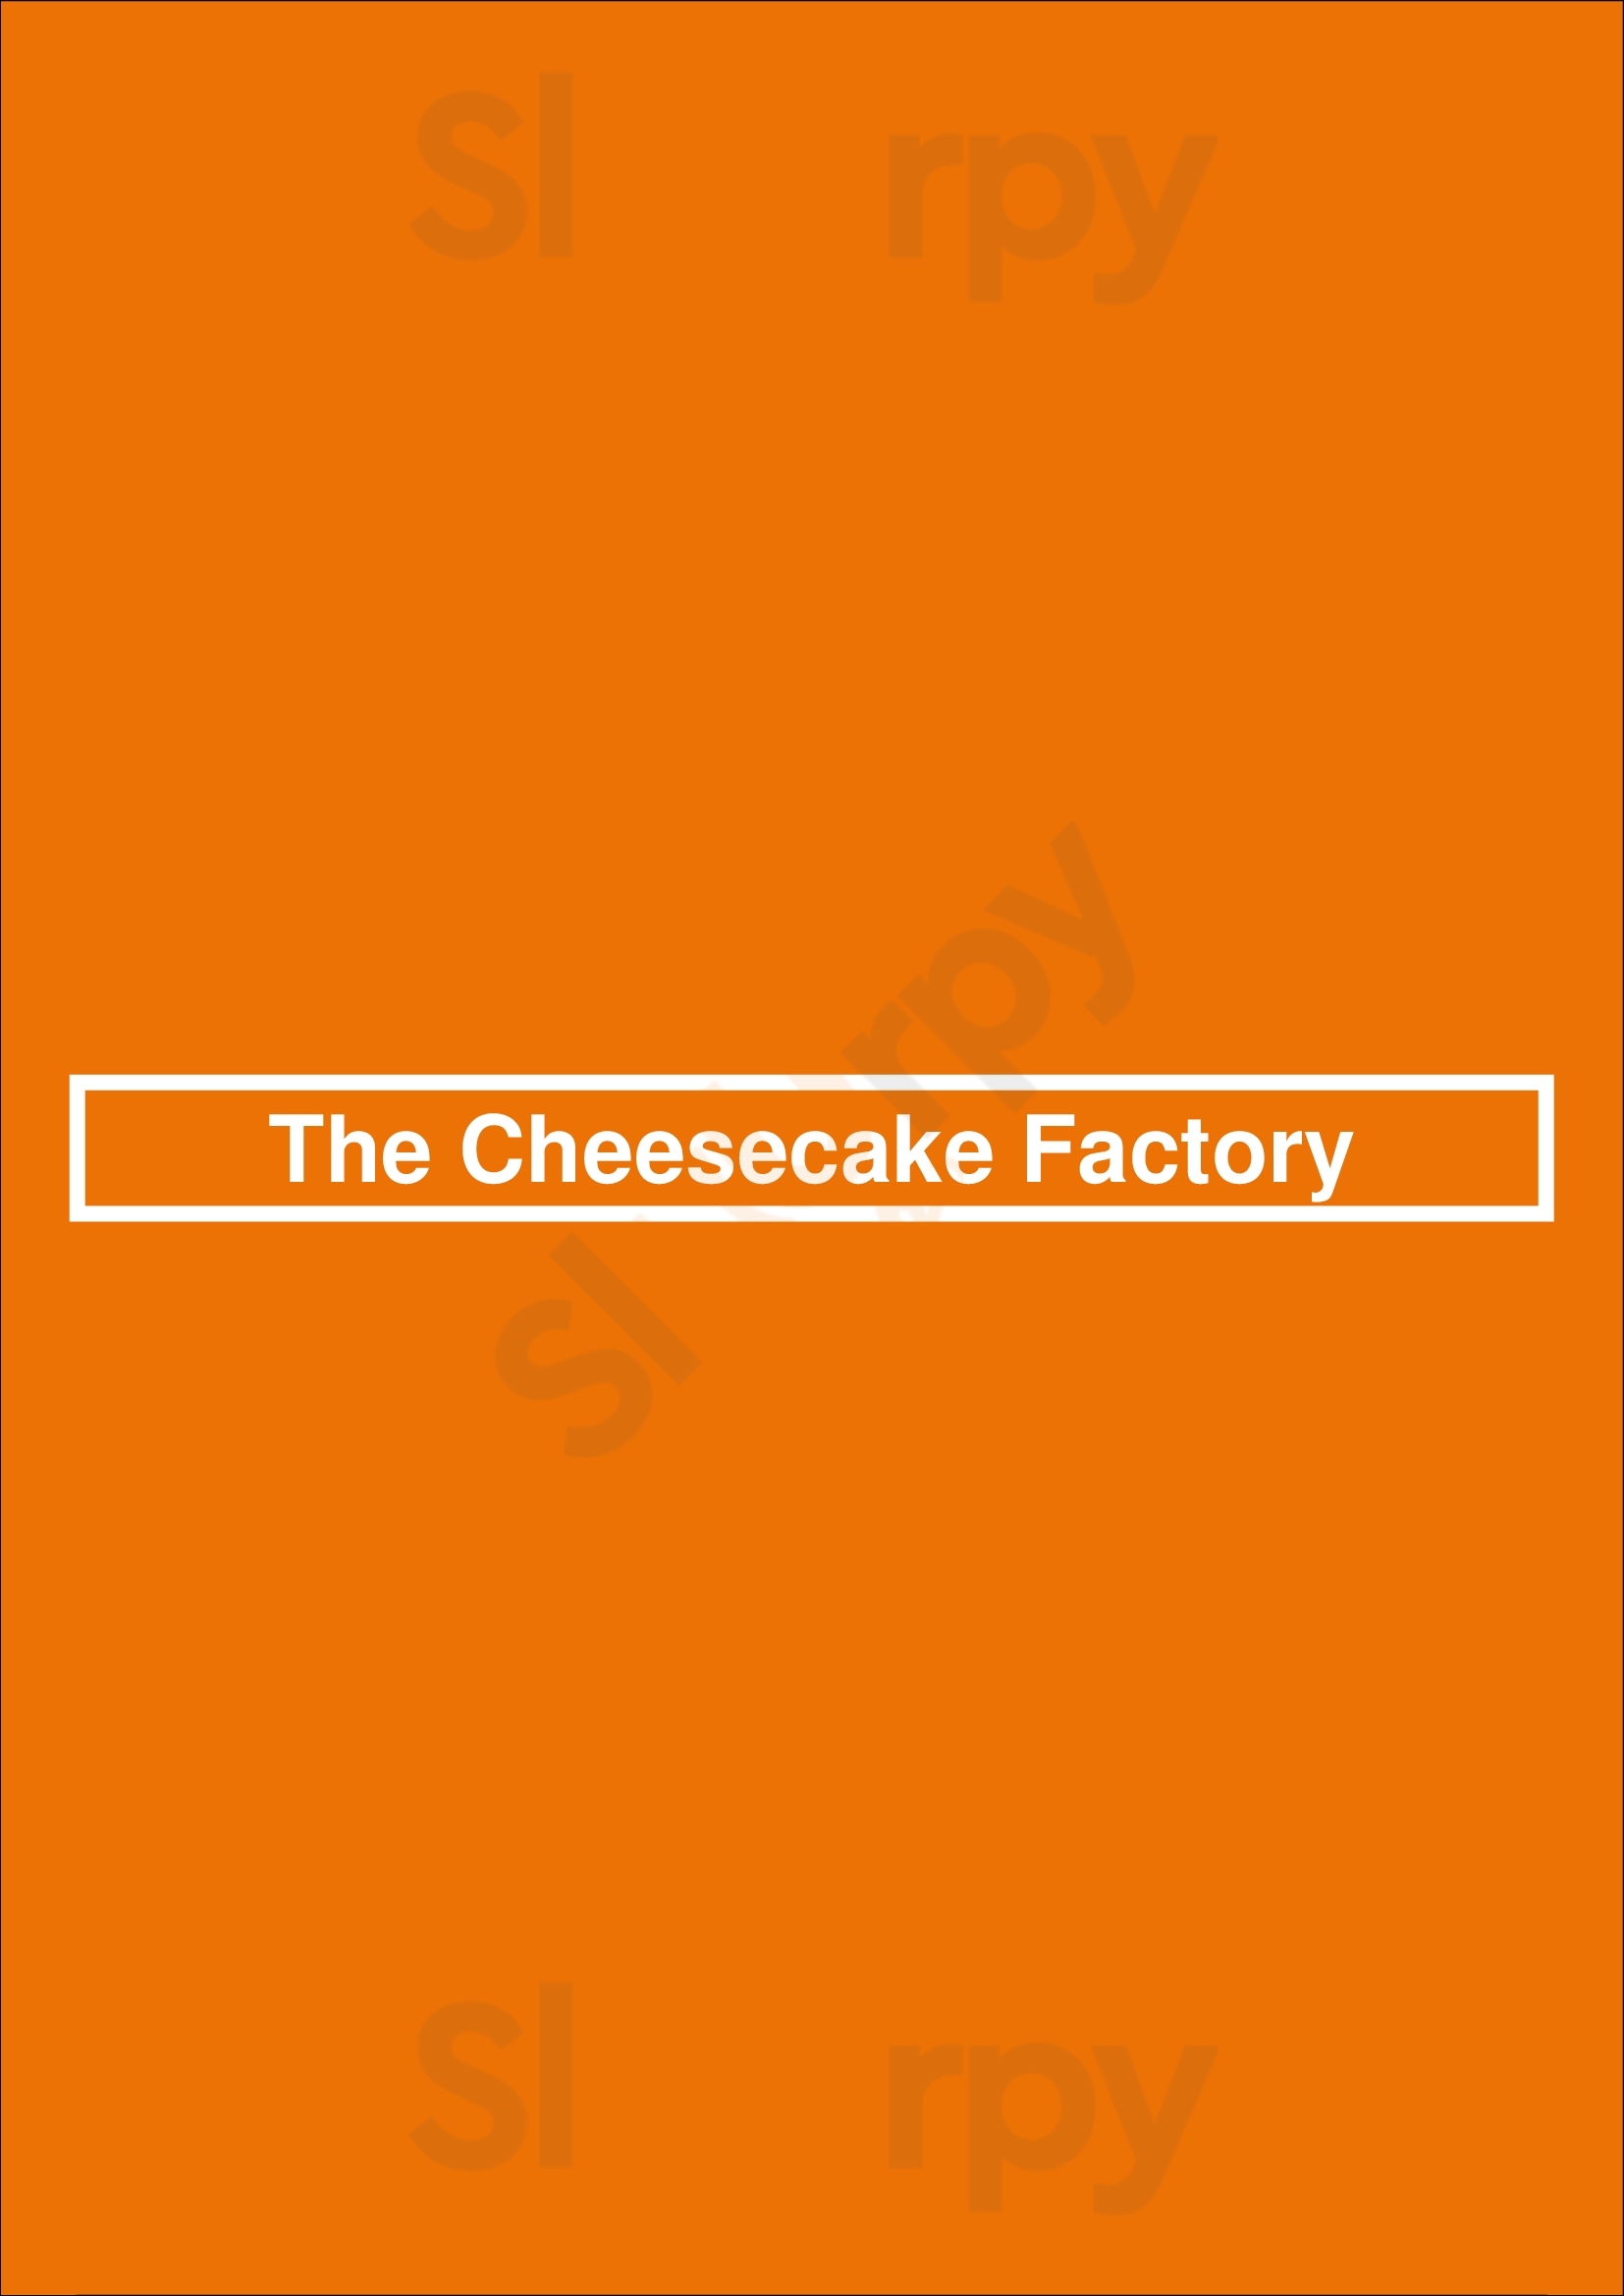 The Cheesecake Factory Indianapolis Menu - 1